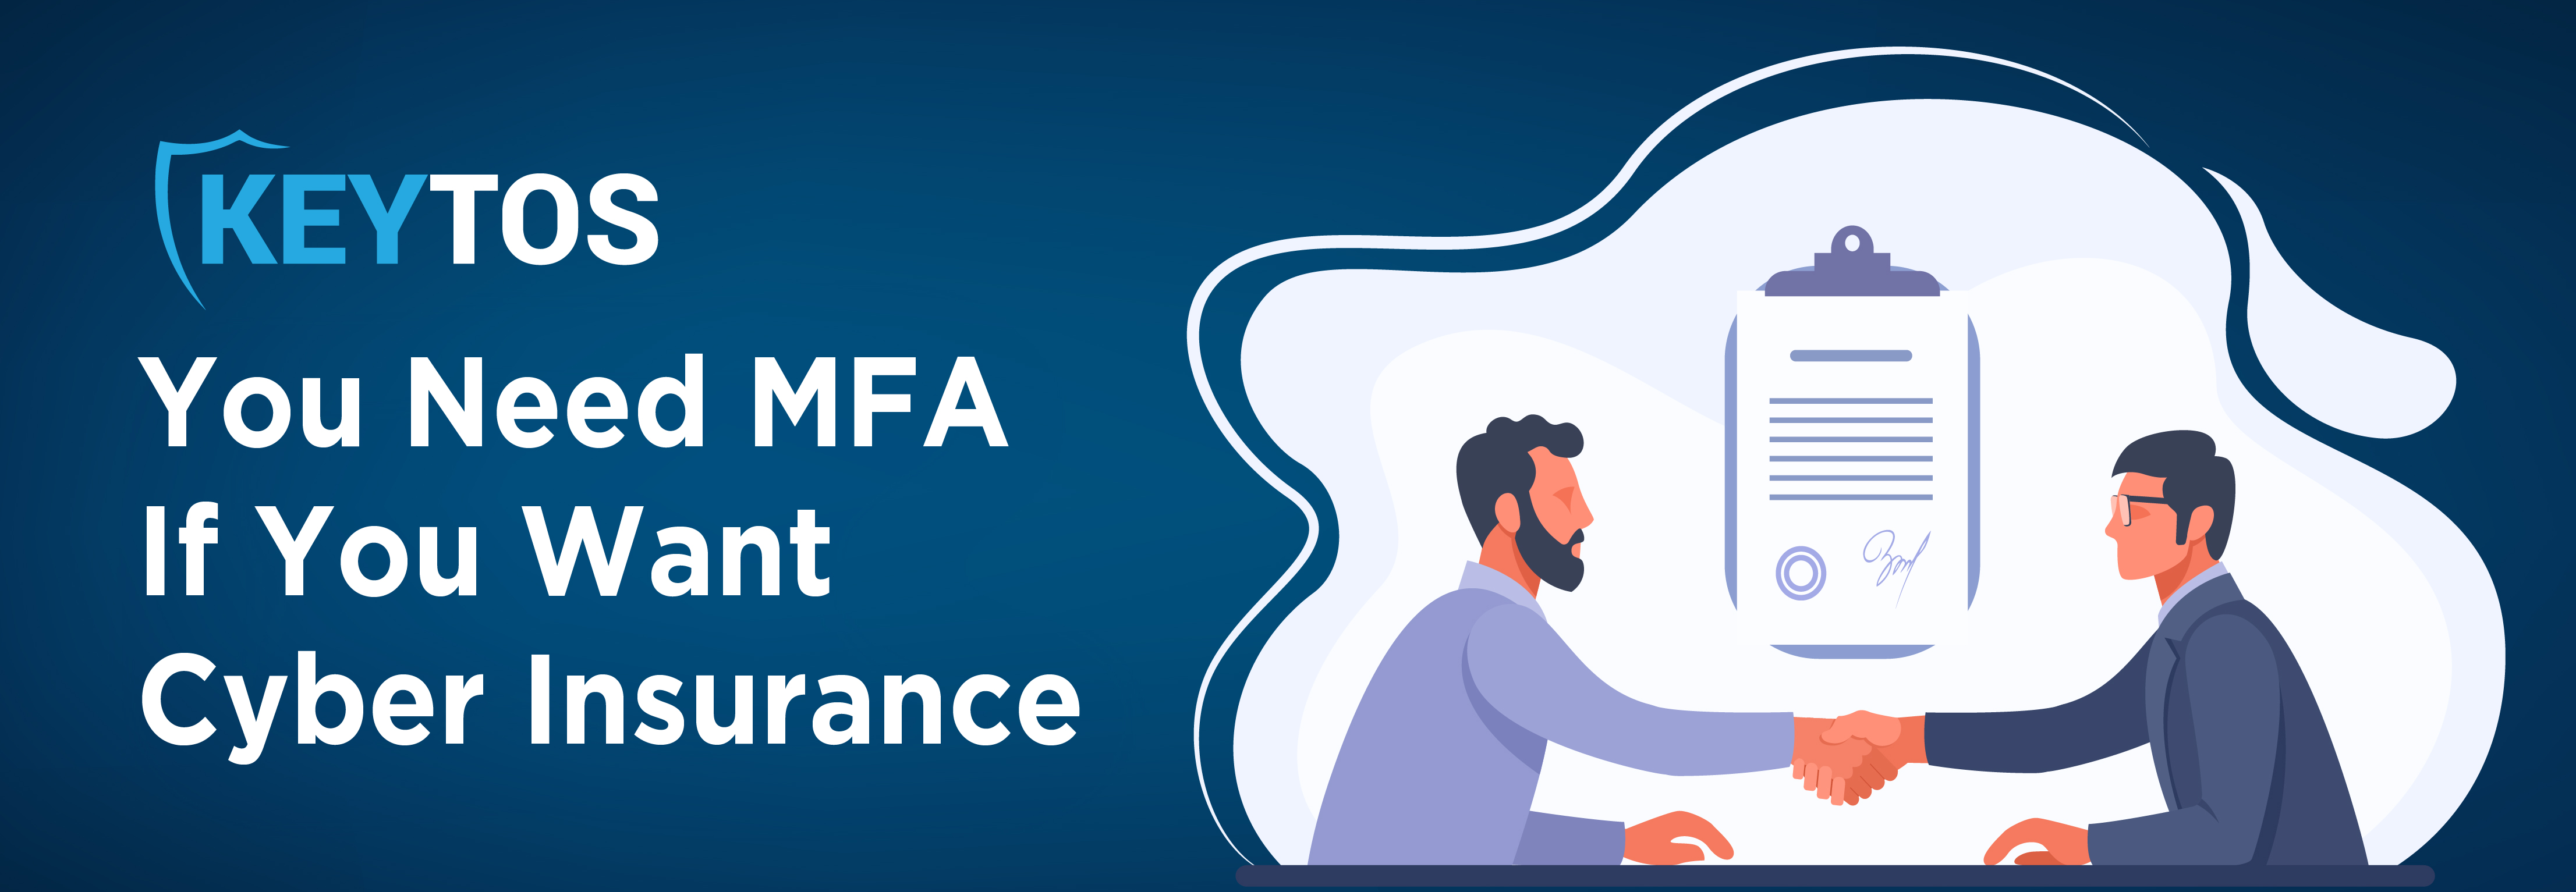 You need MFA if you want cyber insurance